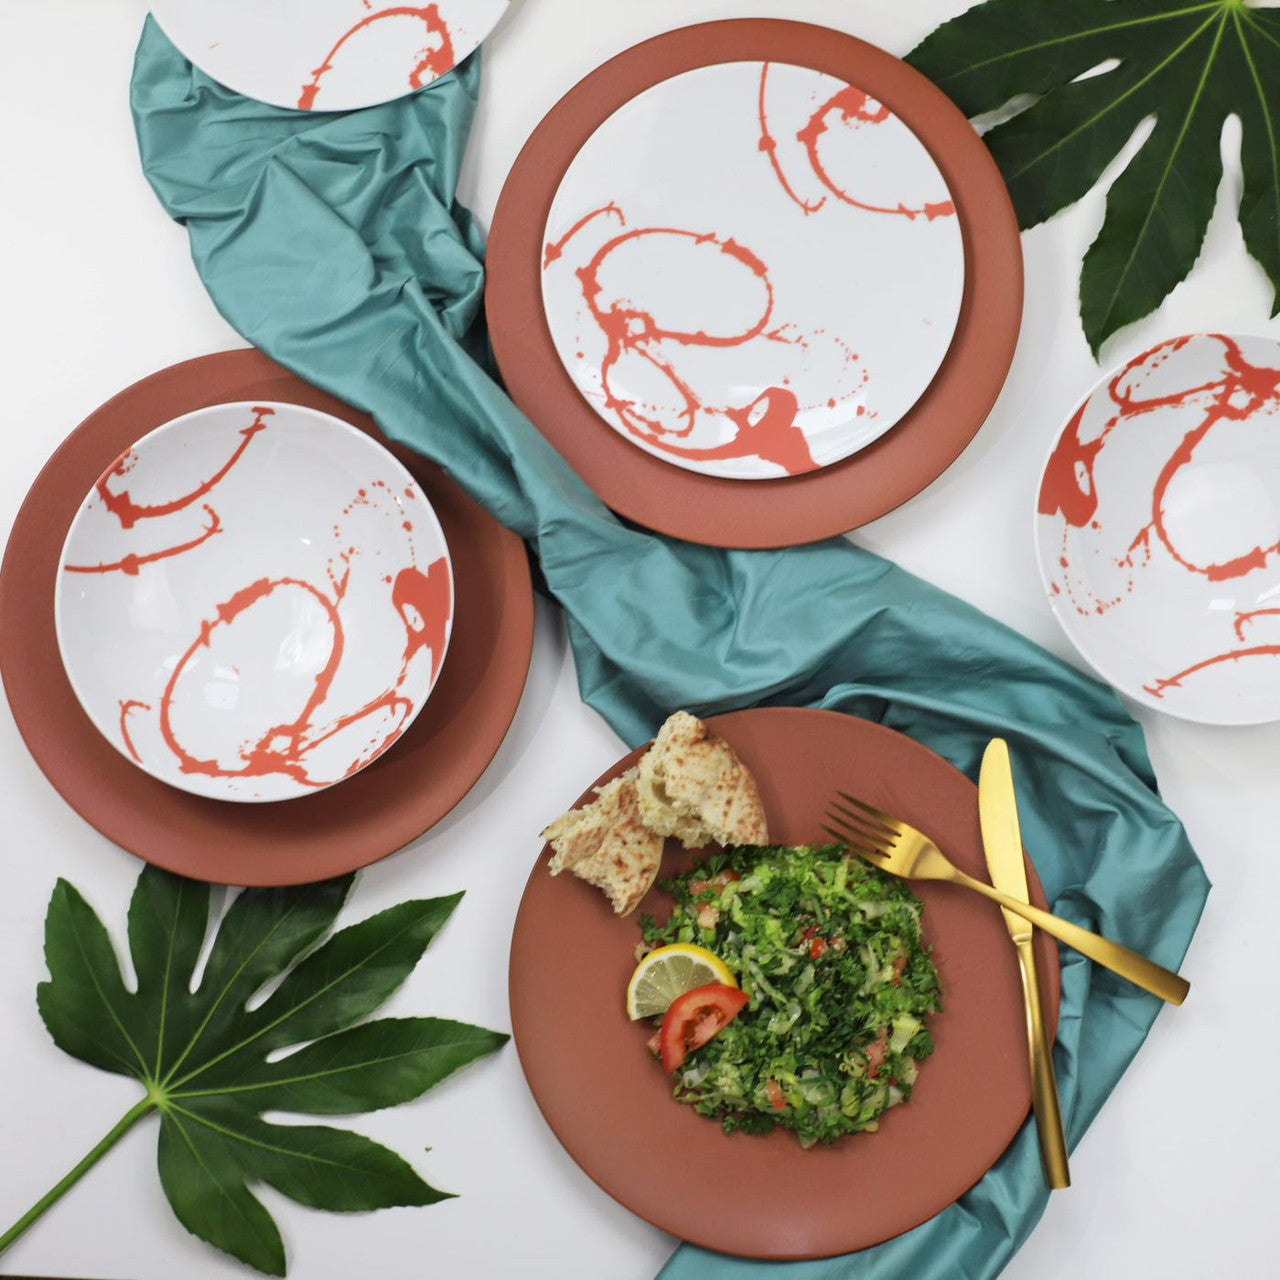 Nile 12 Piece Dinnerware Set in Rosetta Red - Euro Ceramica 